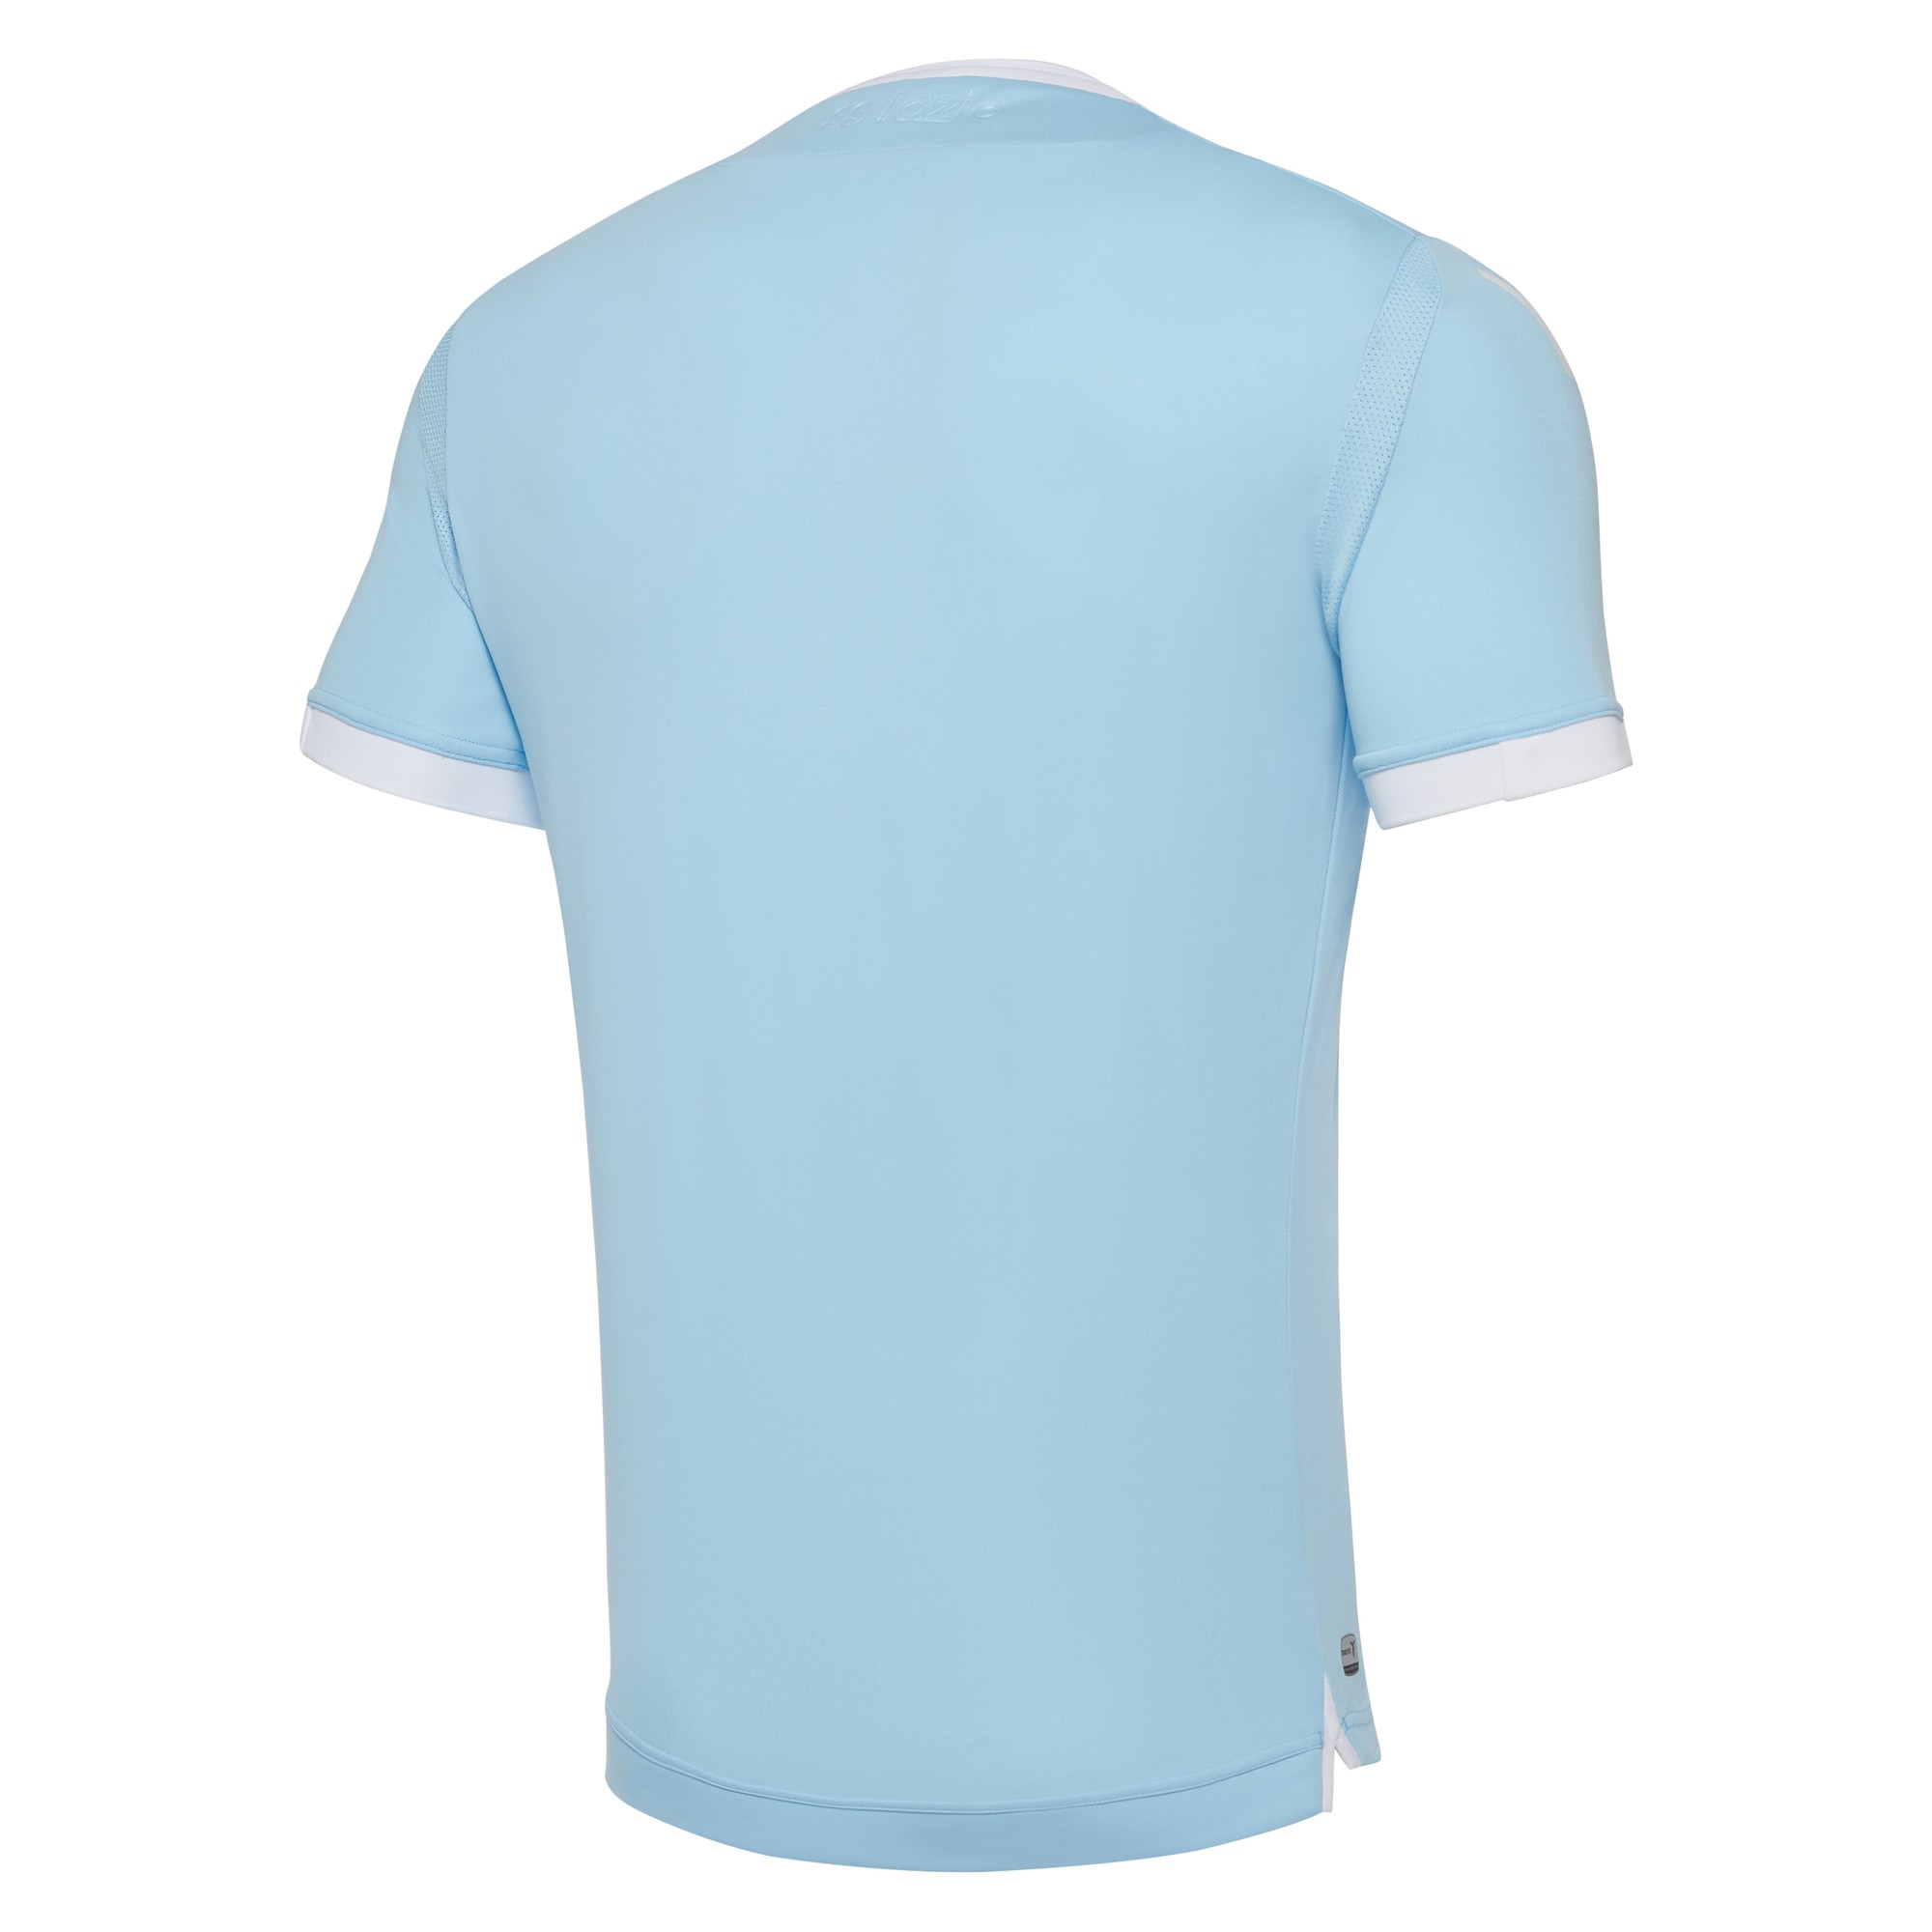 Lazio Home 2017/18 Soccer Jersey Shirt - Click Image to Close